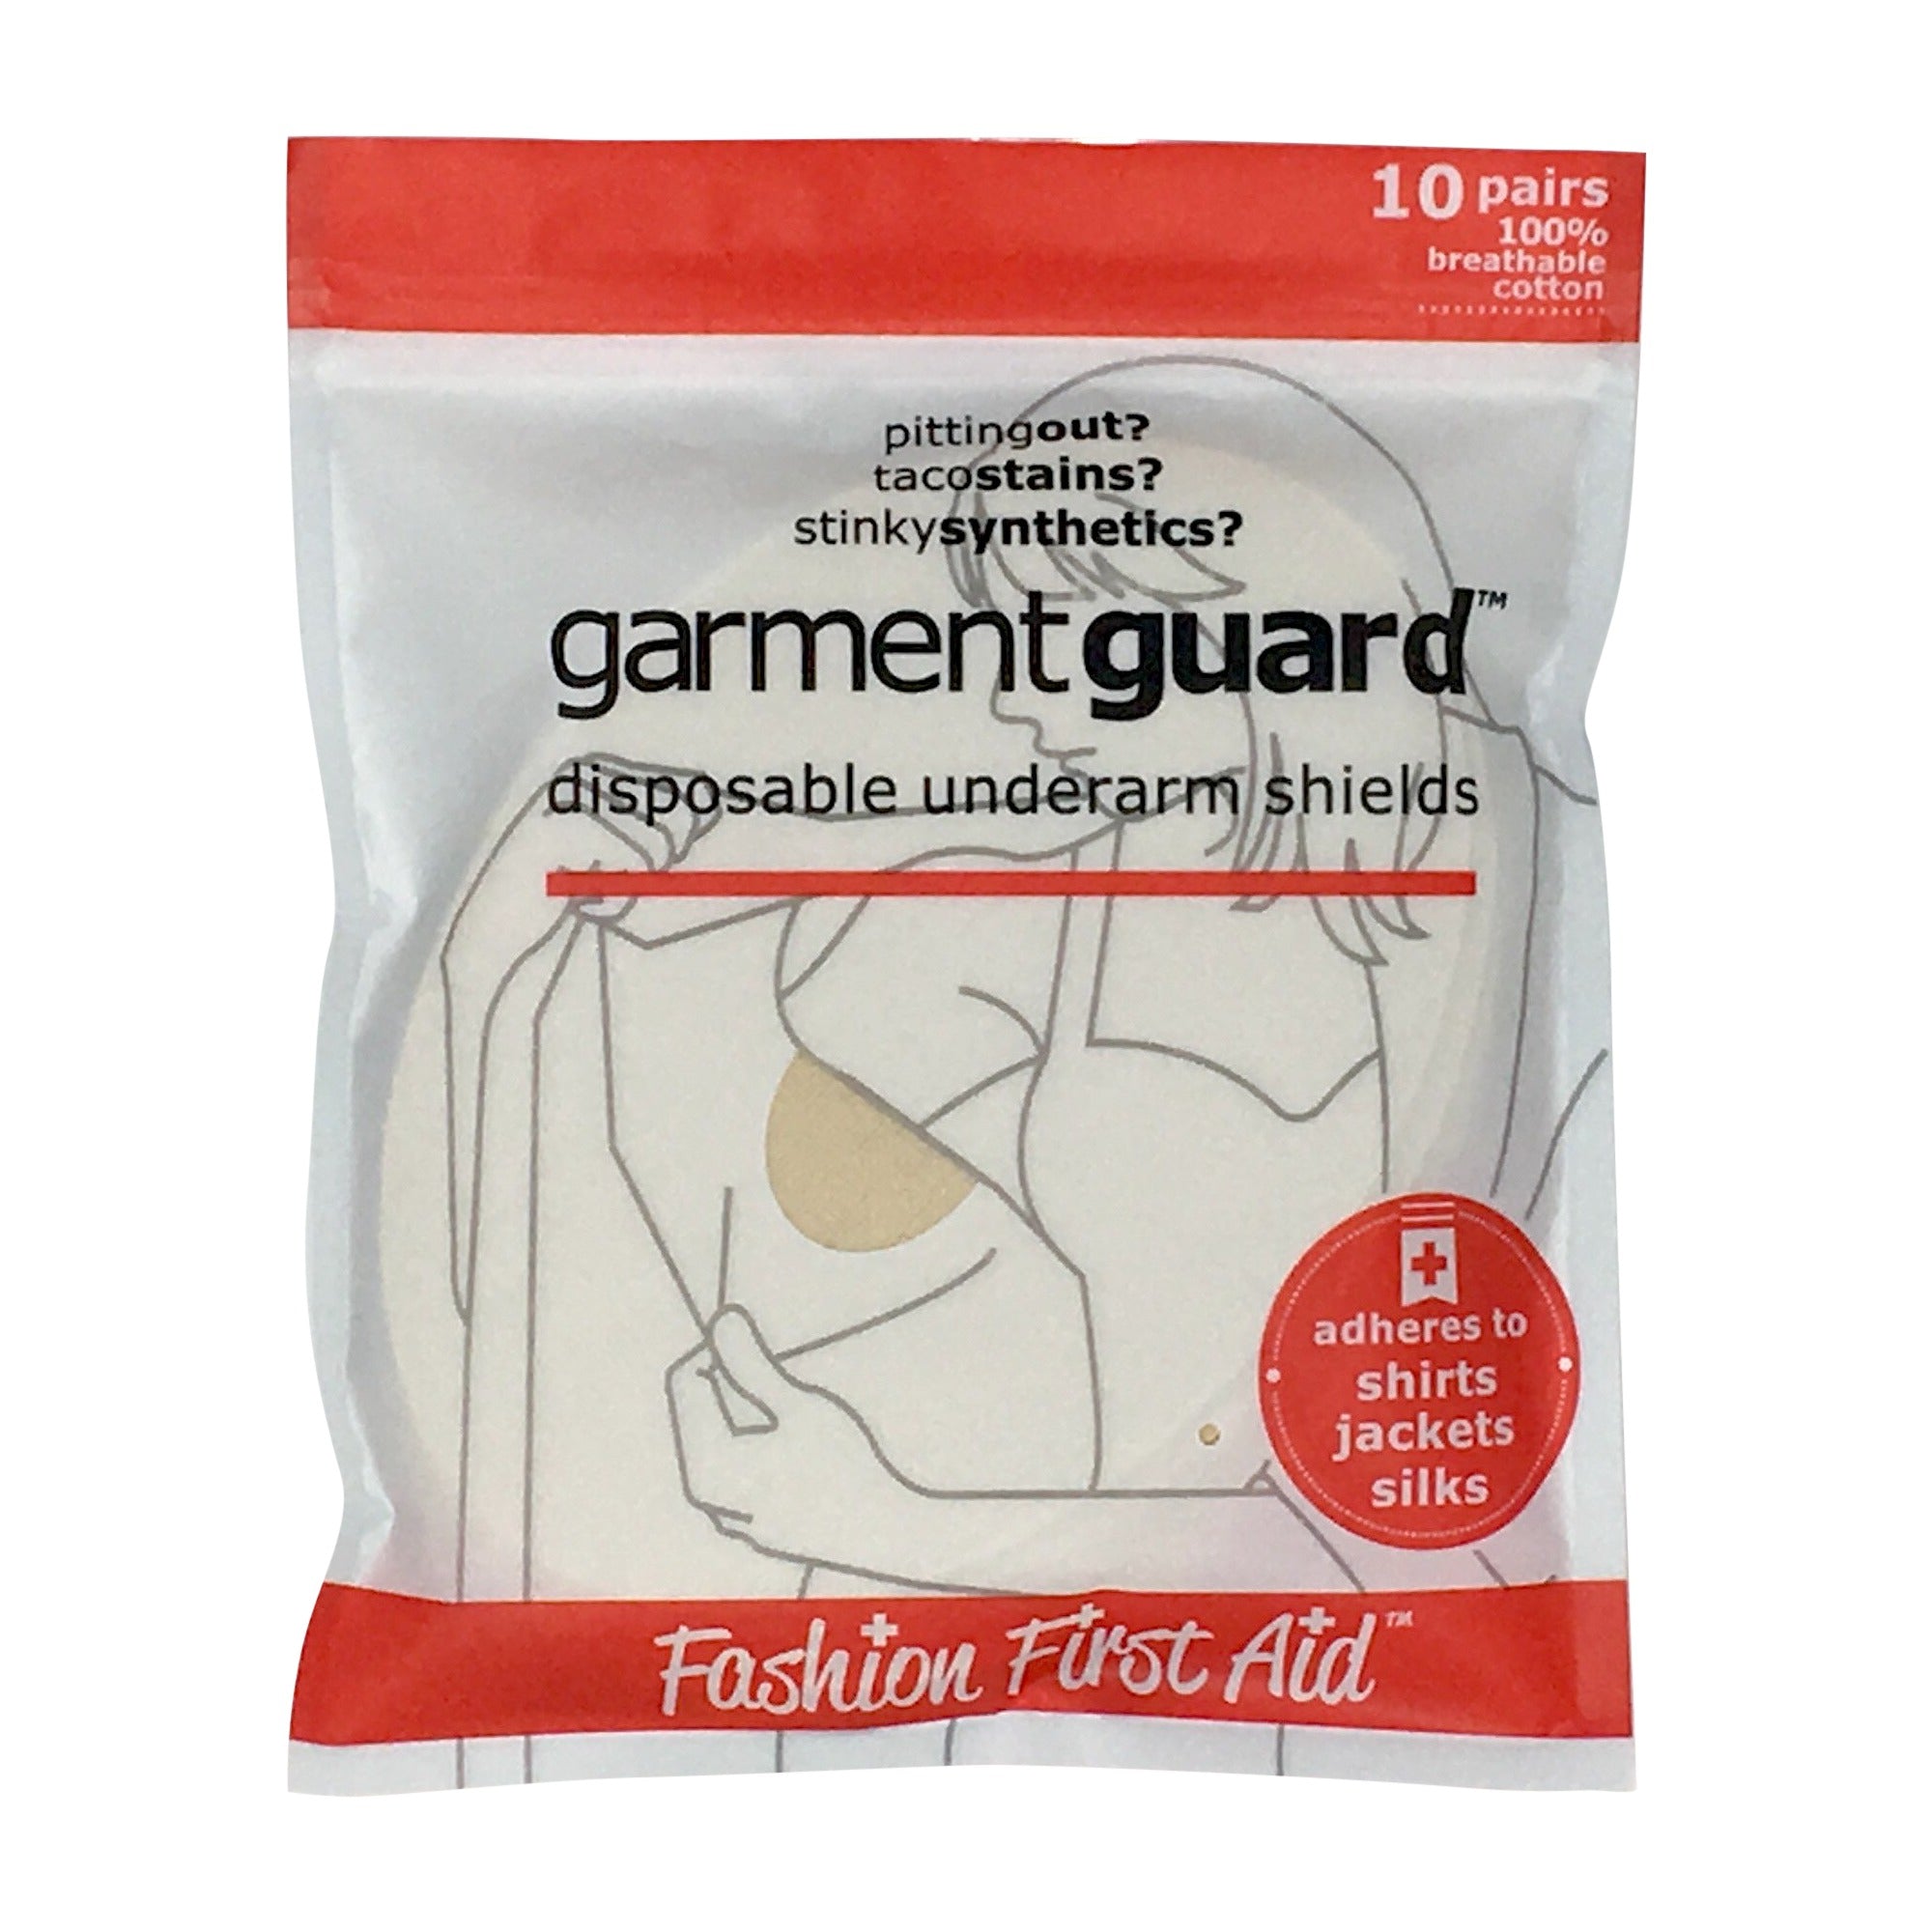 Garment Guard: the original cotton disposable adhesive underarm